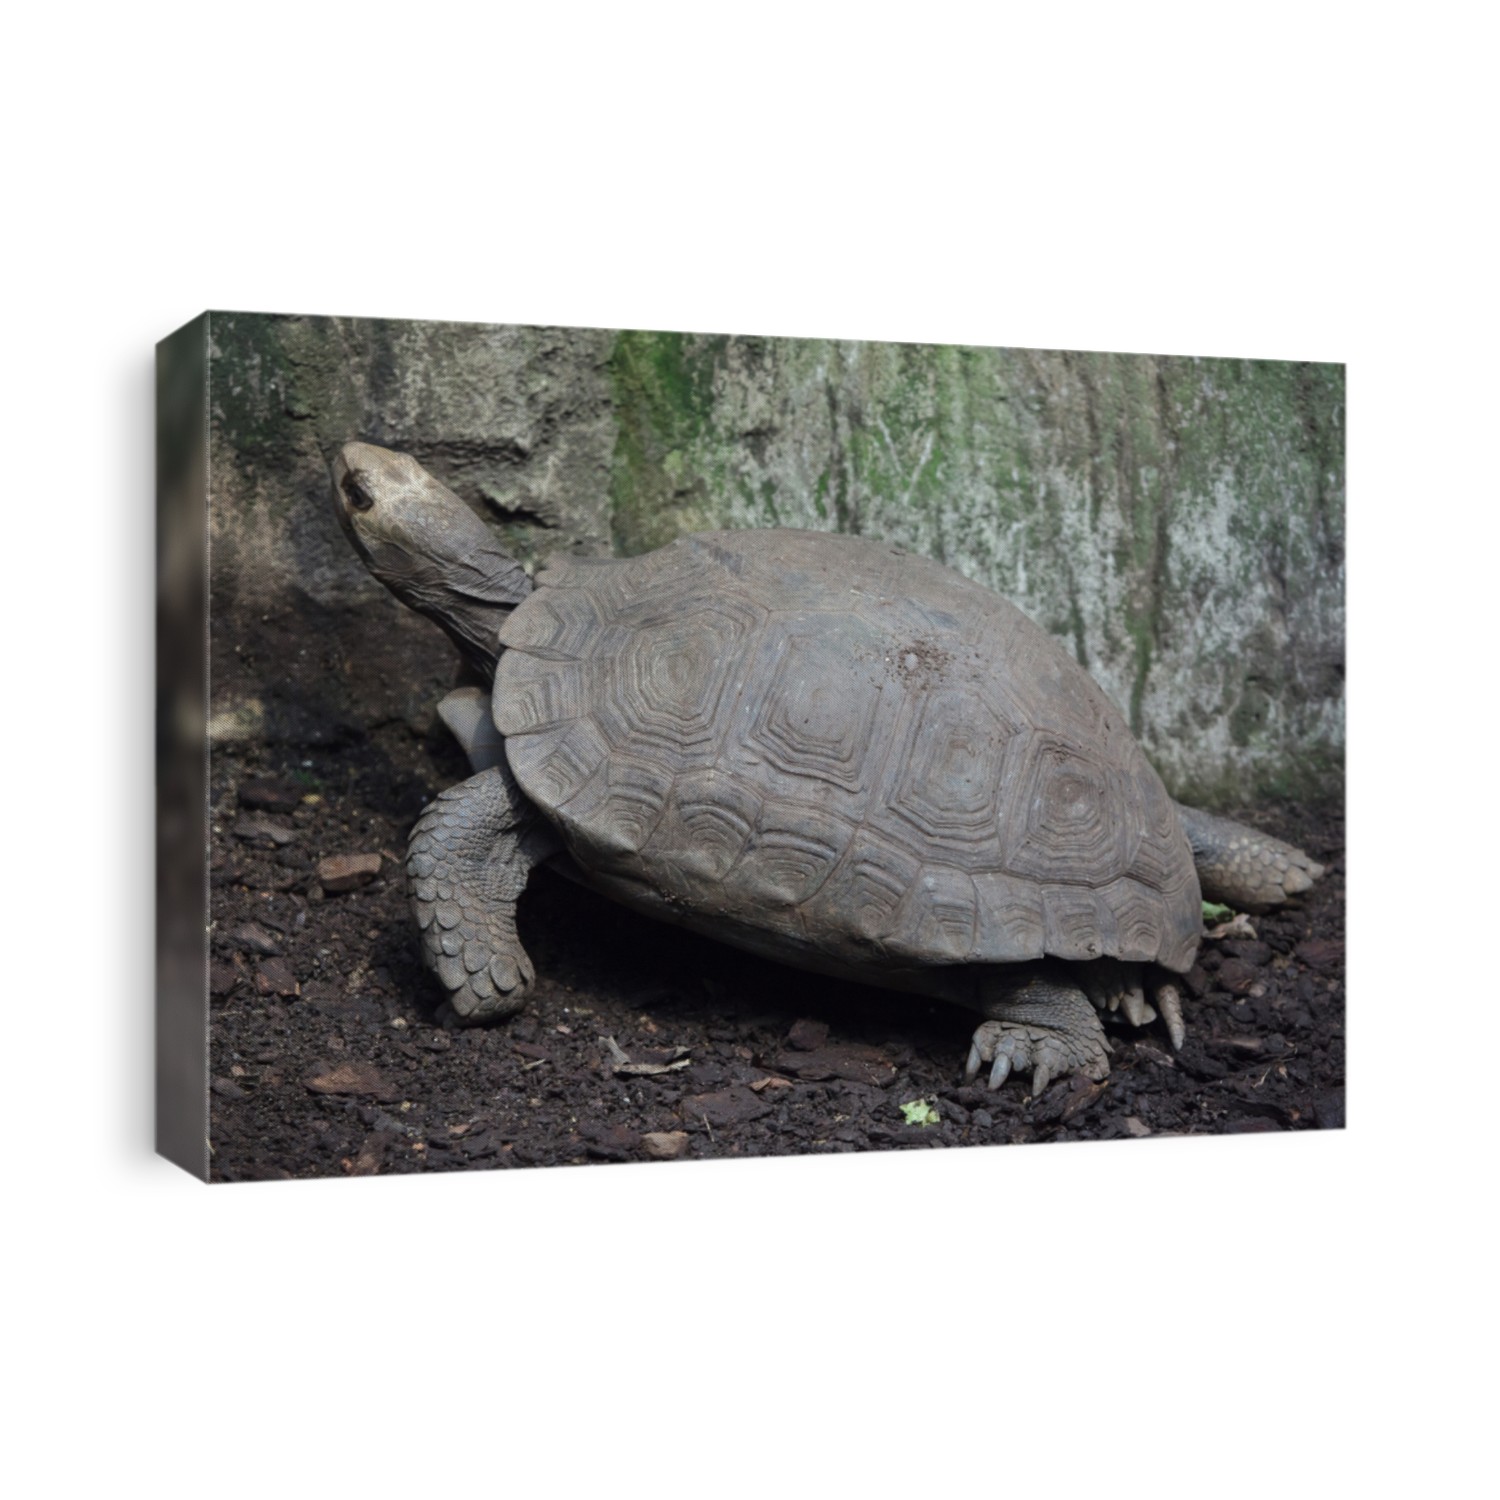 Asian giant tortoise (Manouria emys emys), also known as the Southern brown tortoise. 